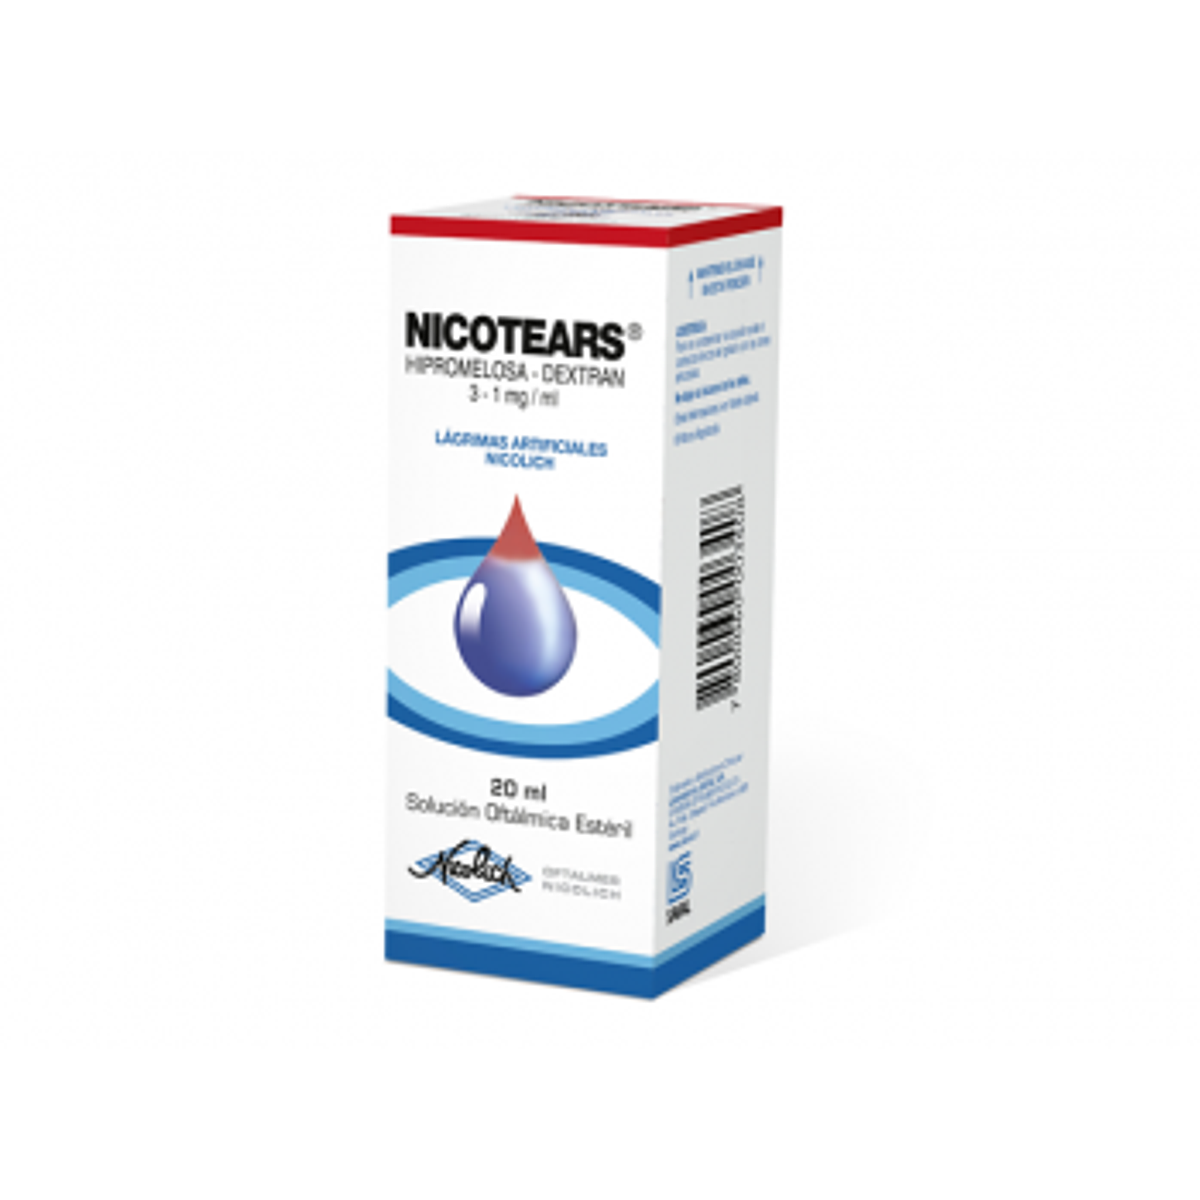 Nicotears Hipromelosa/Dextran 20ml